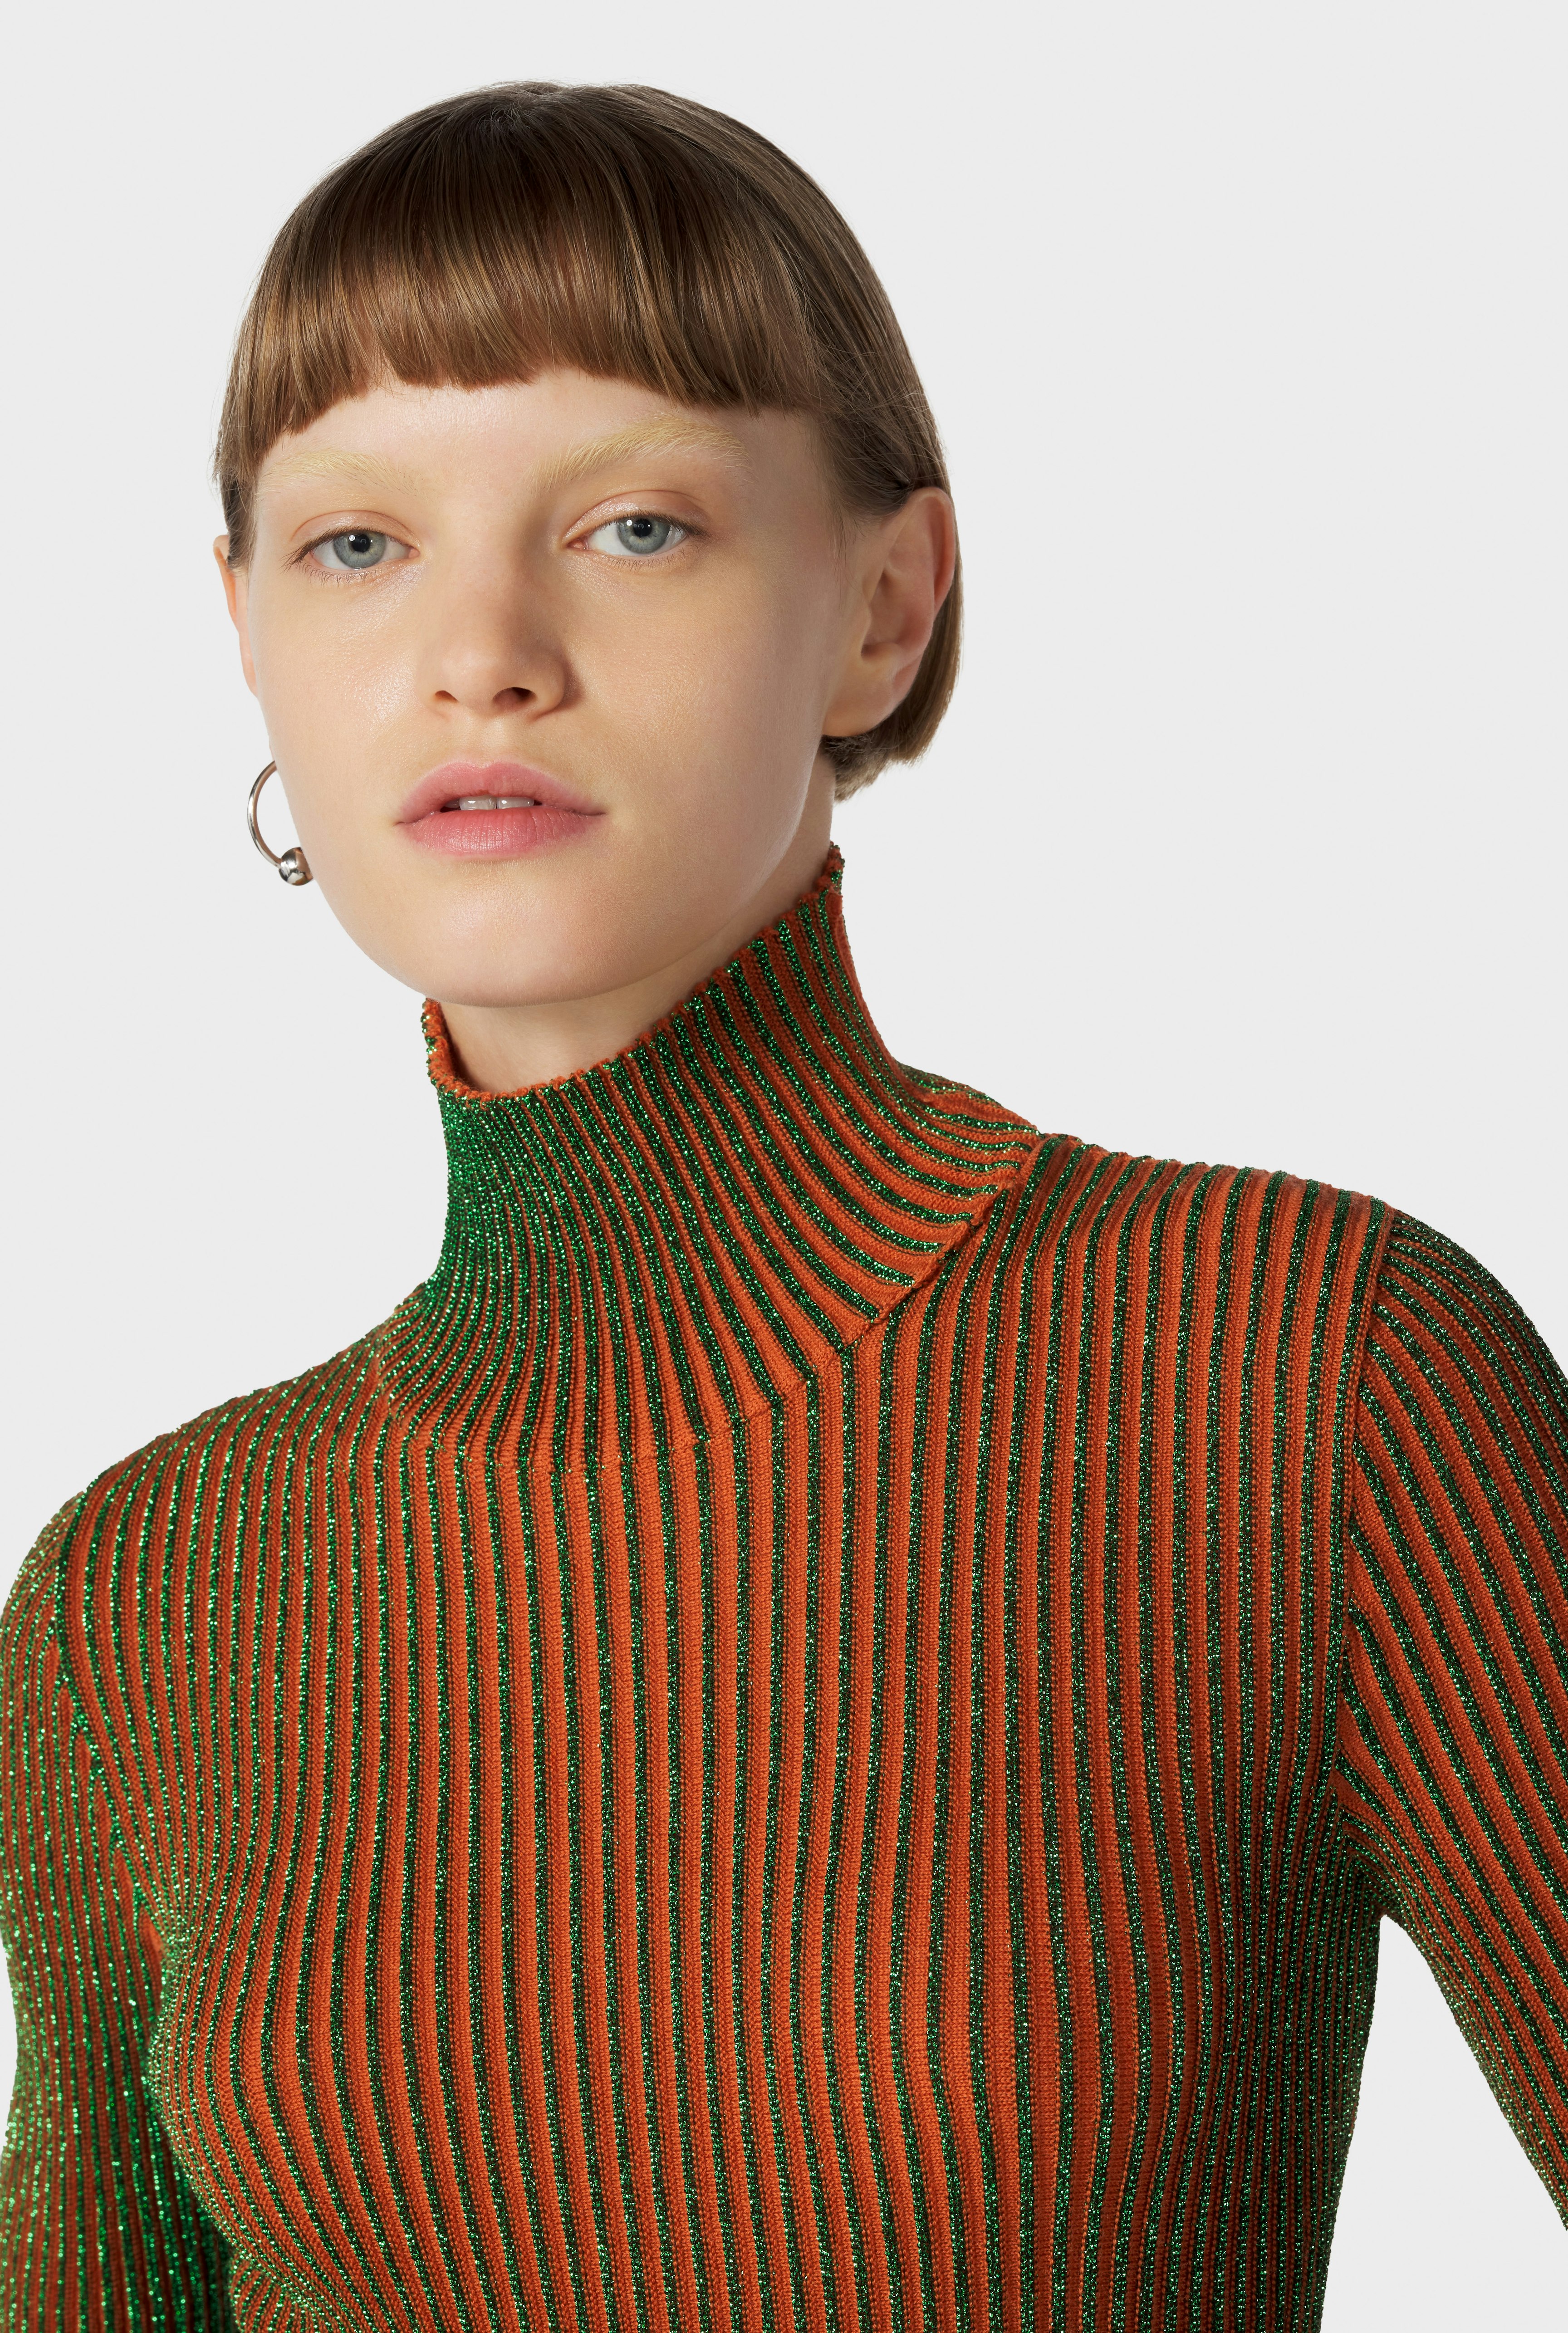 The Orange Cyber Knit Top